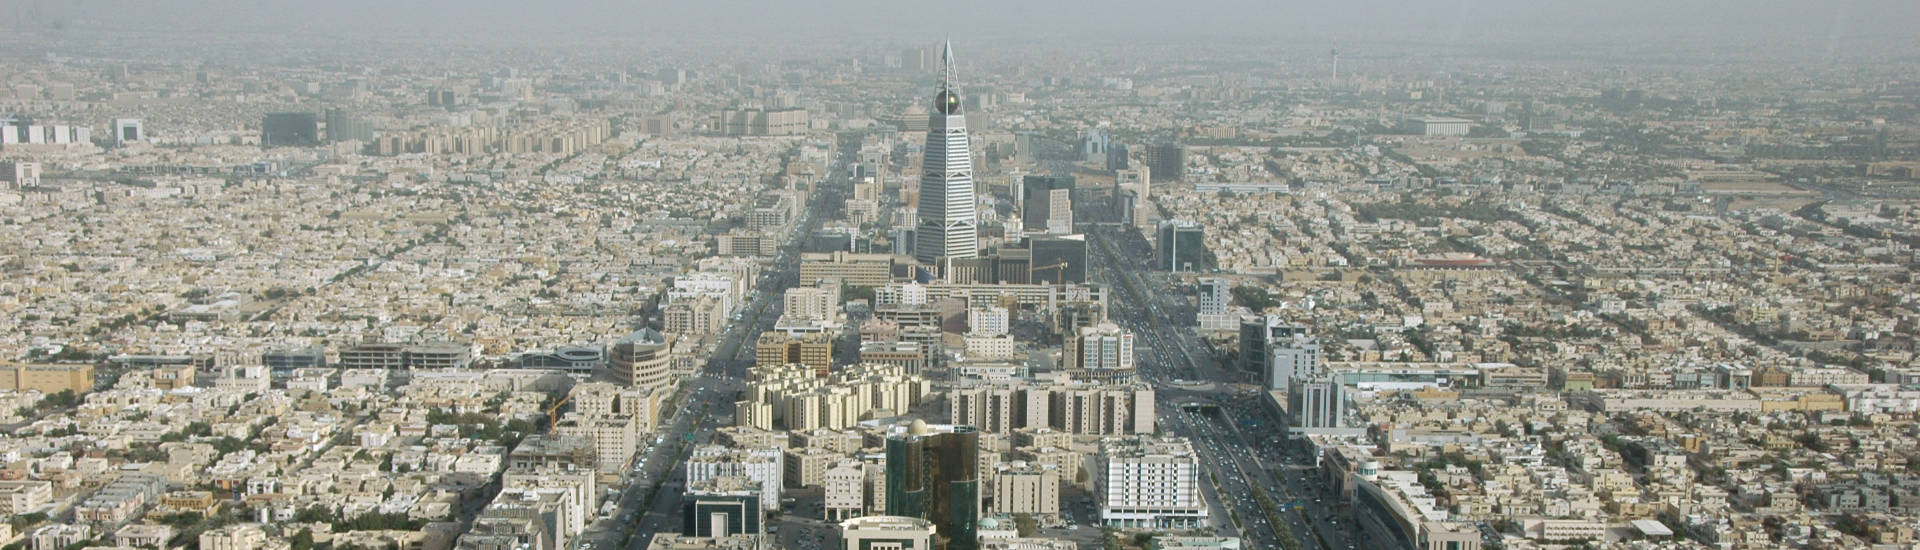 Stadtbild in Riad, Saudi Arabien